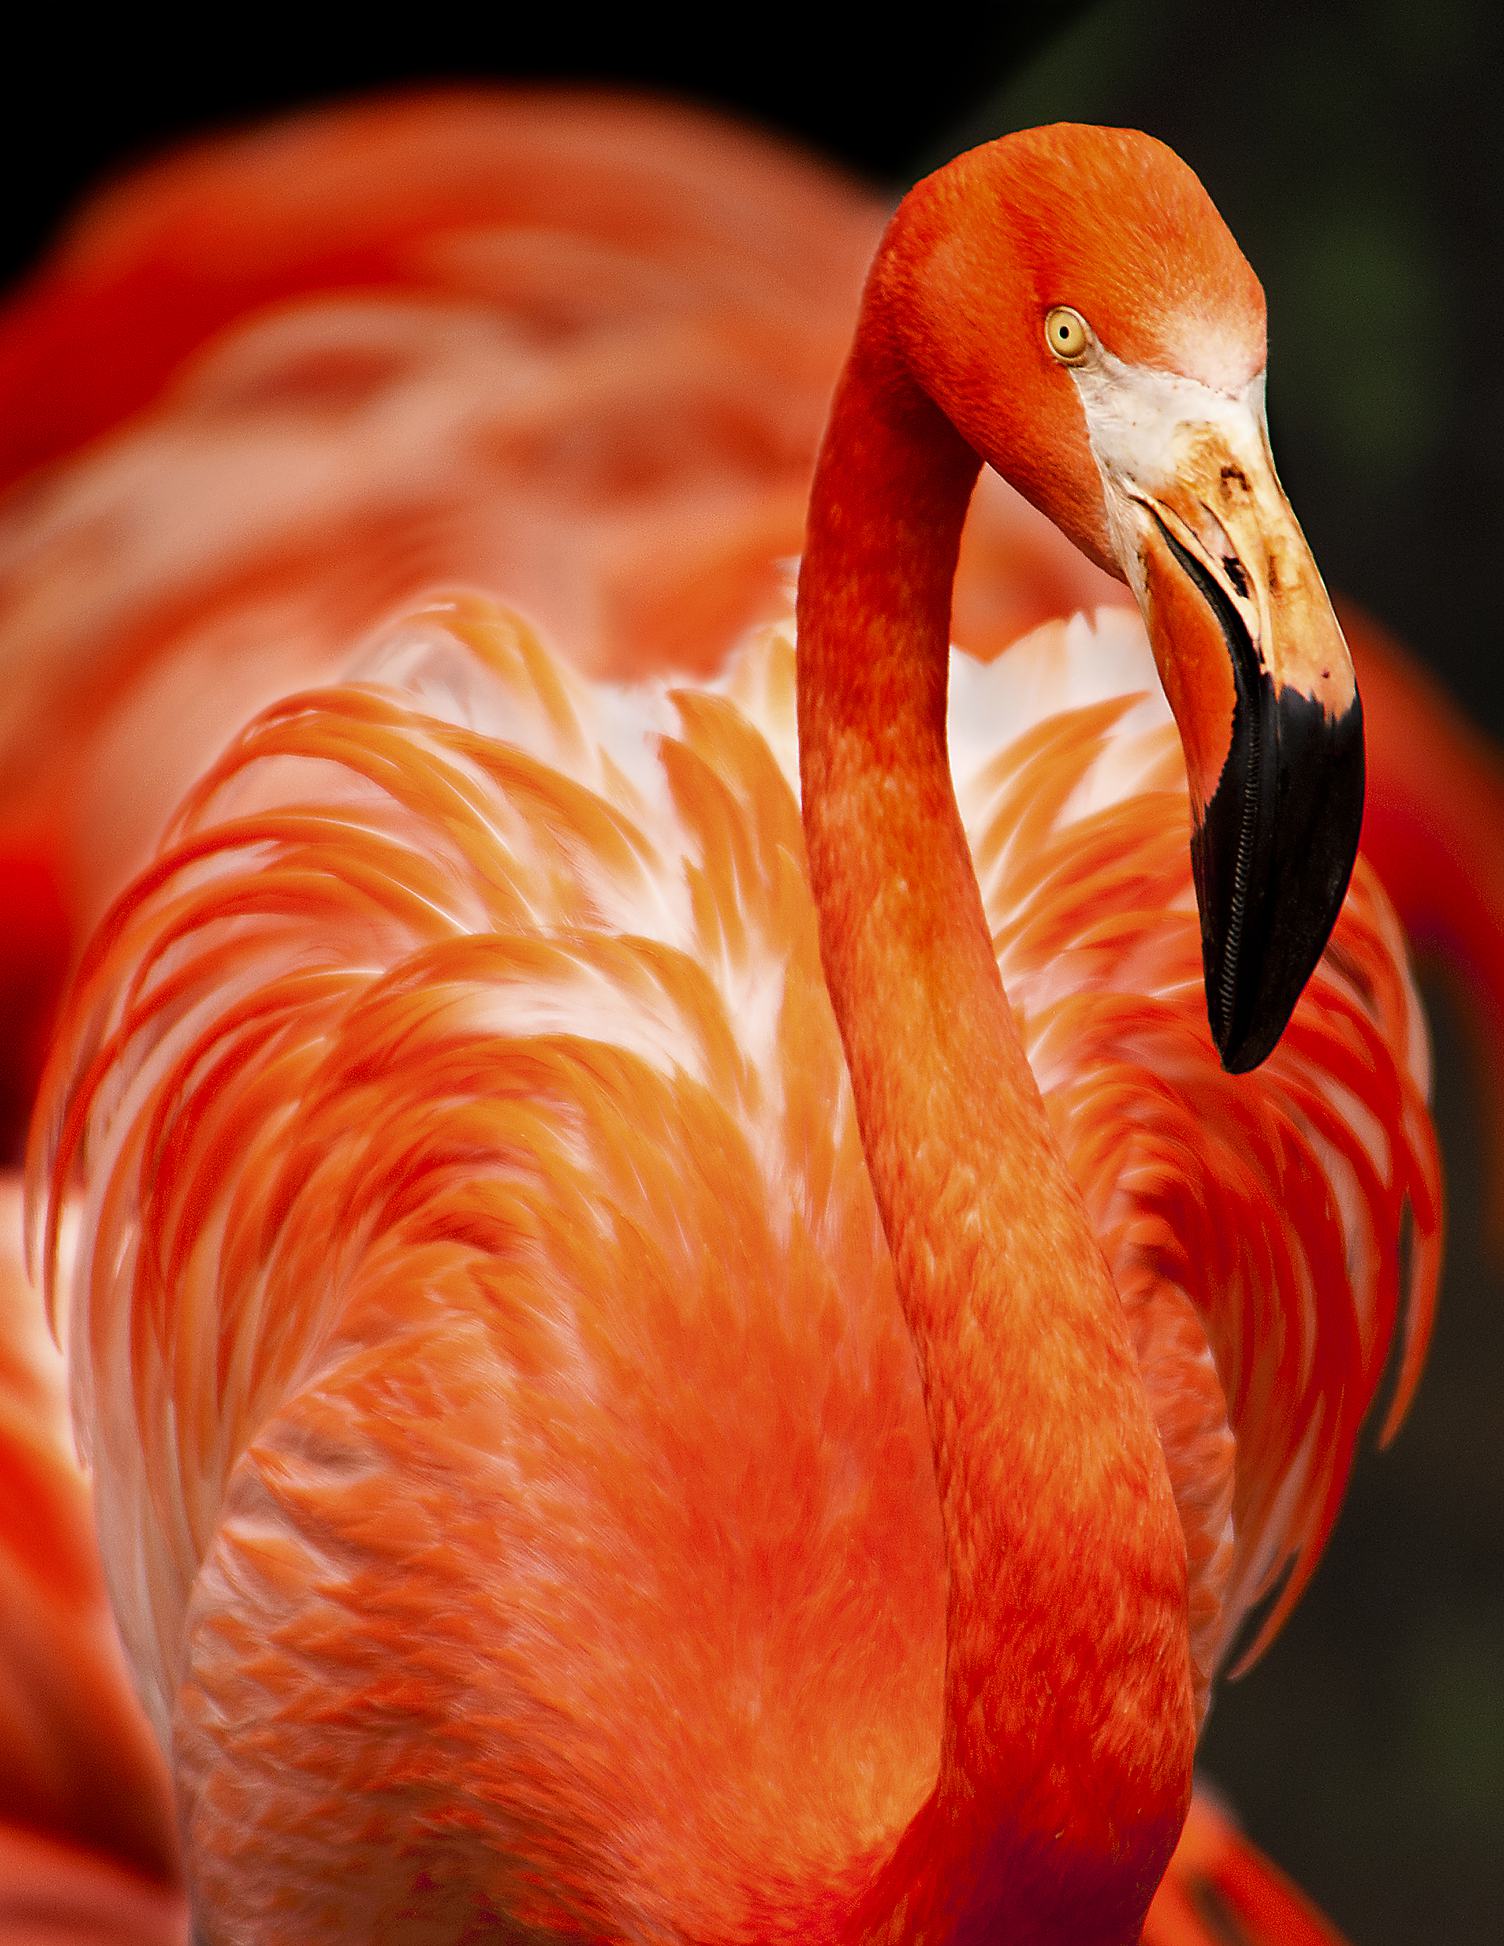 Portrait of Flamingos Head in Profile